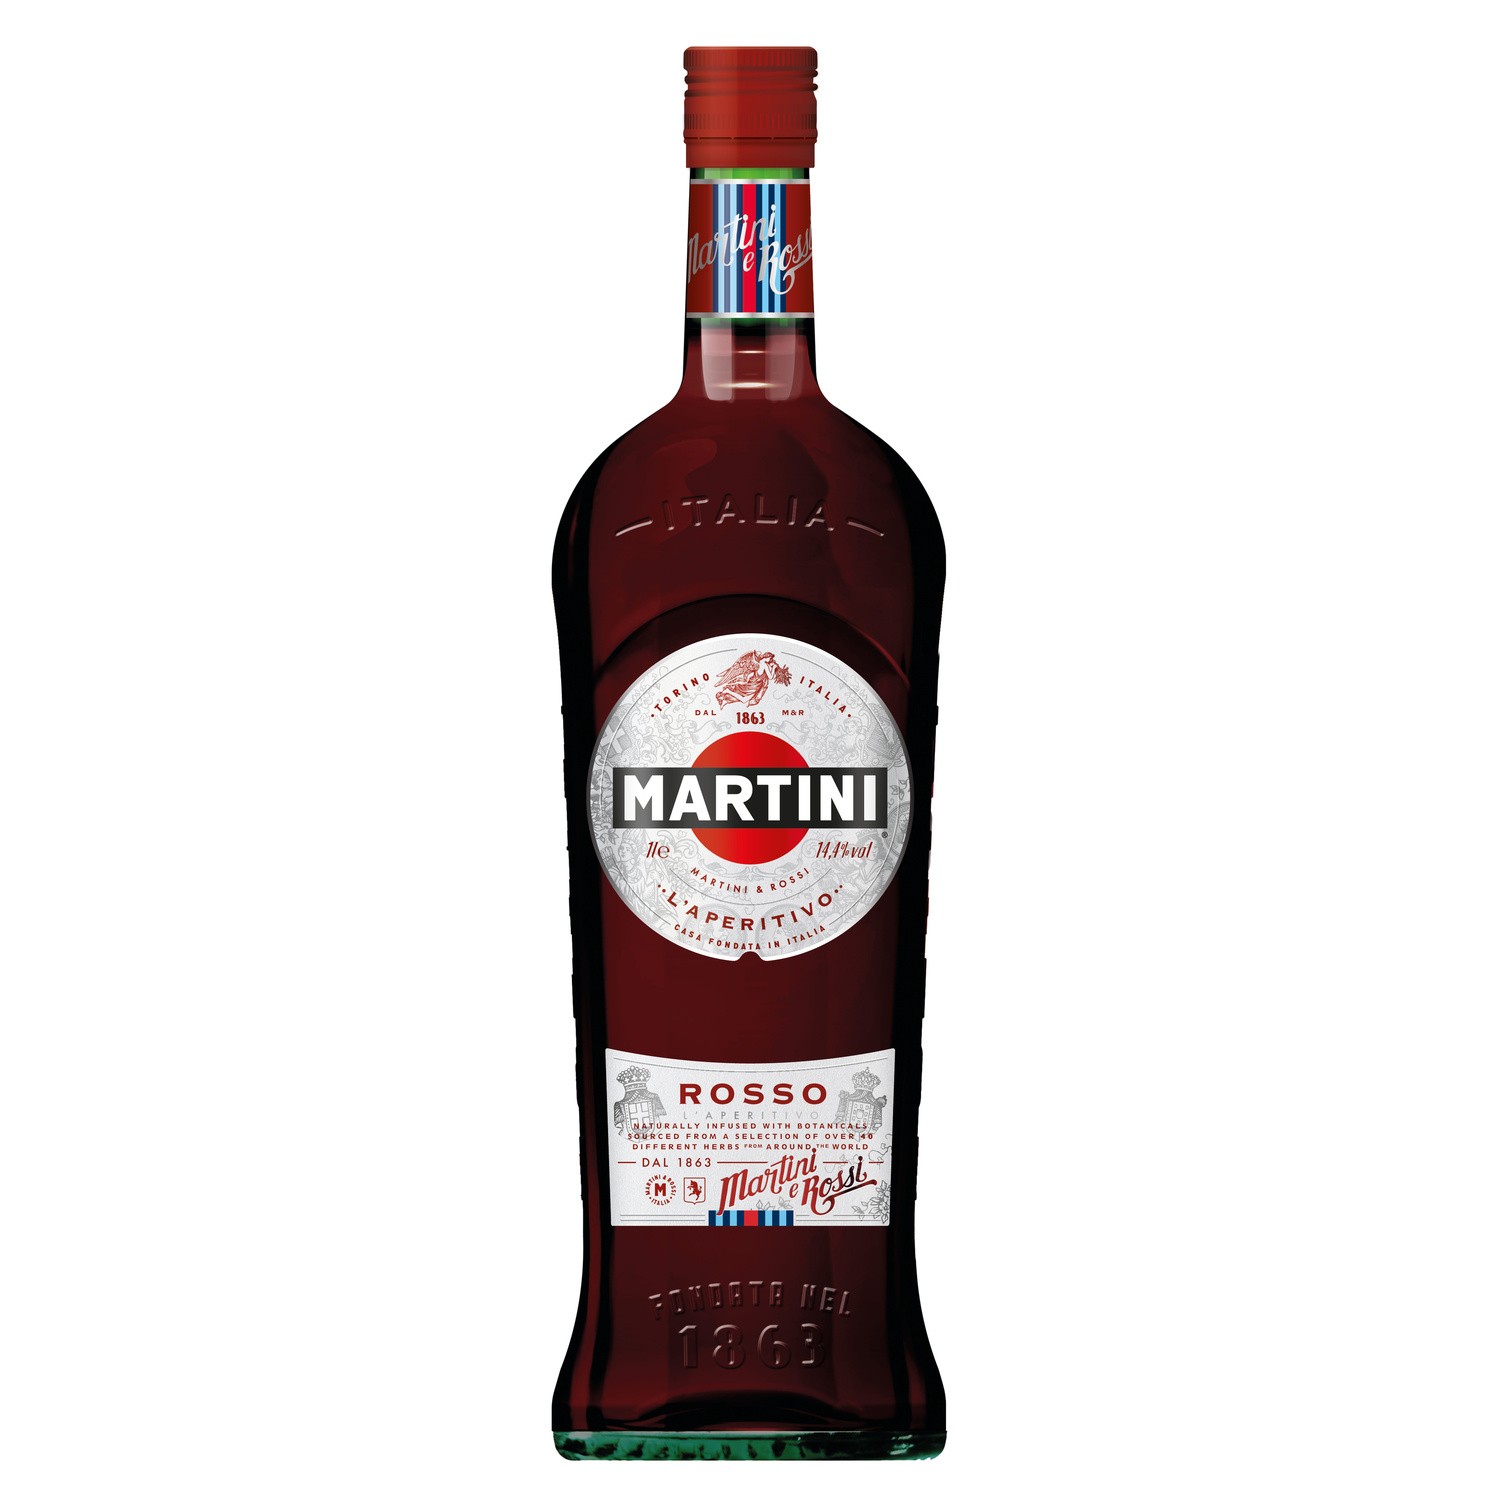 Martini rouge